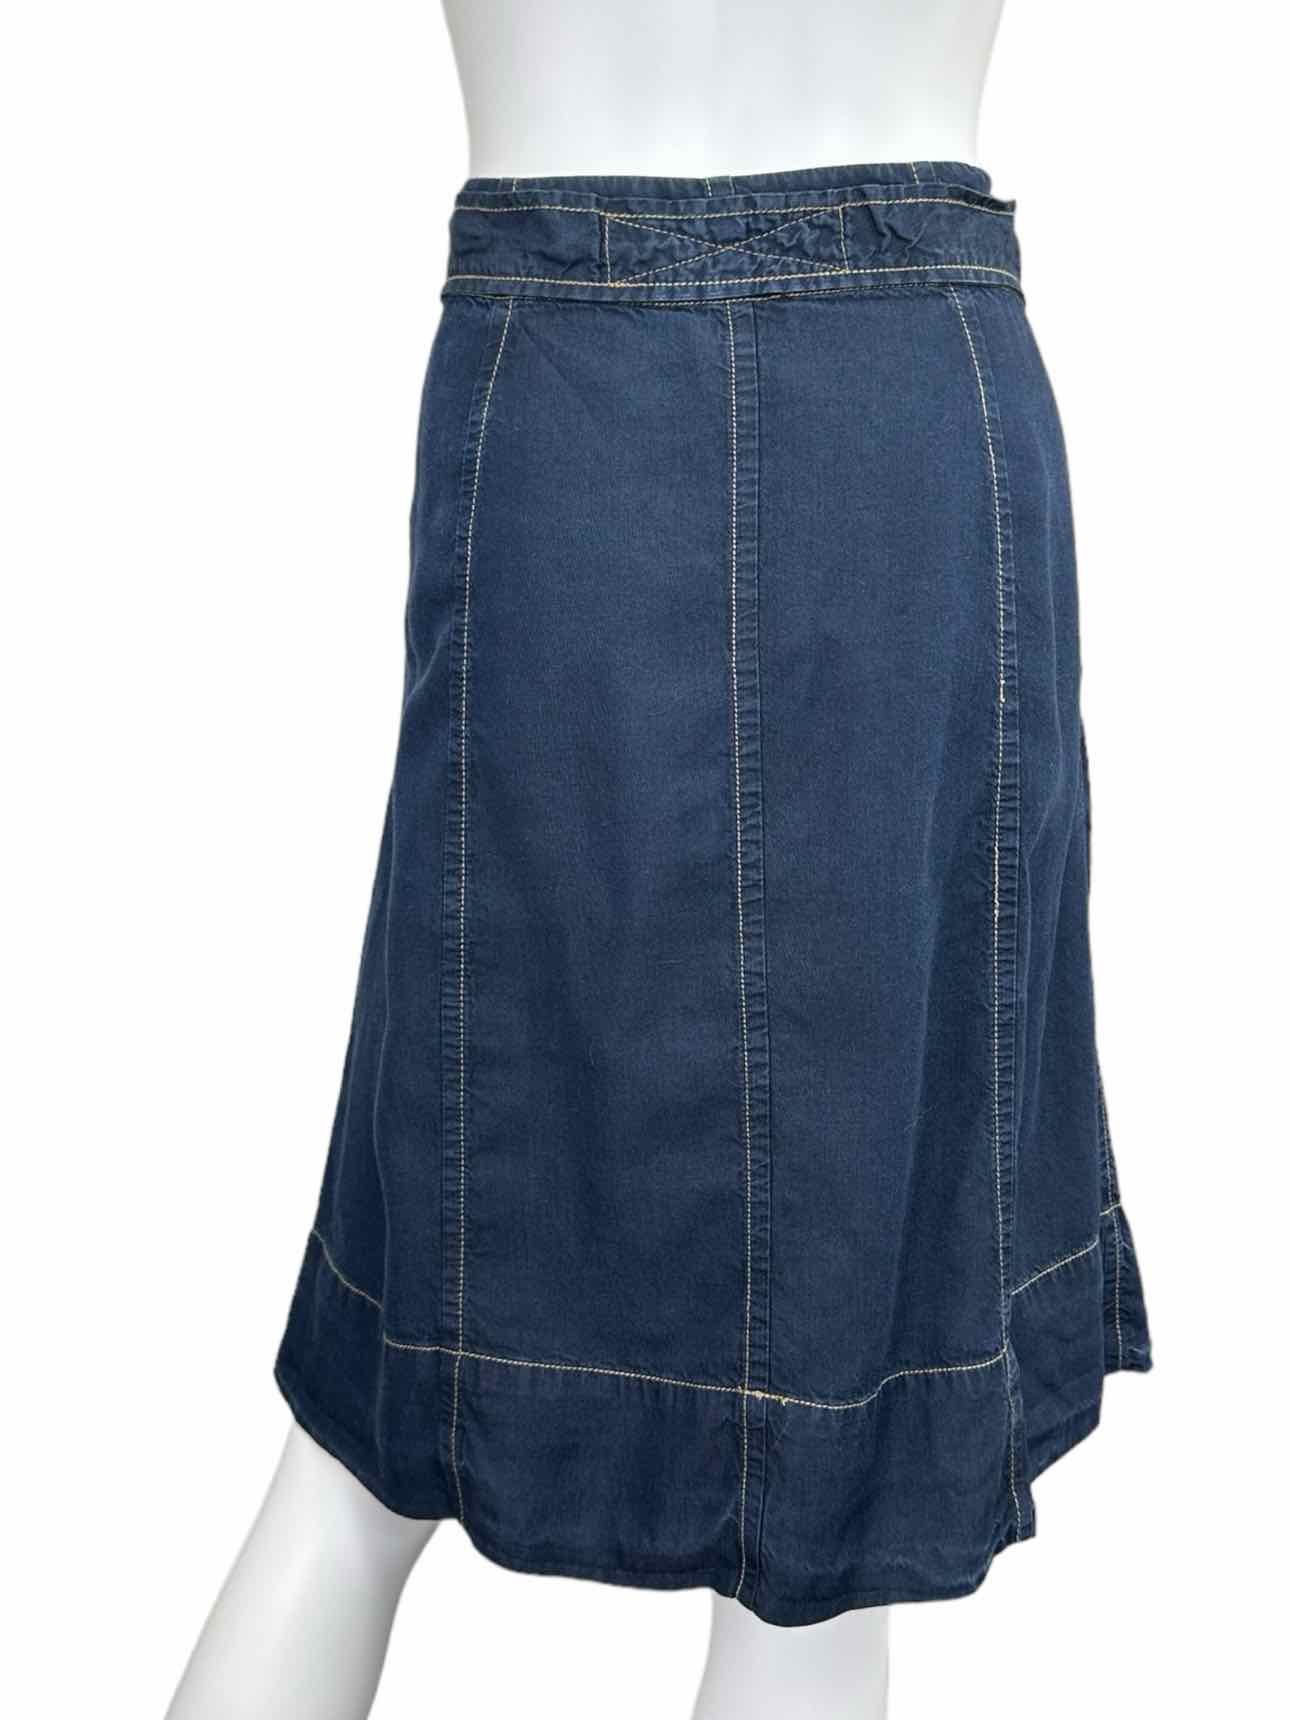 DONNA KARAN New York Blue Chambray Skirt Size S